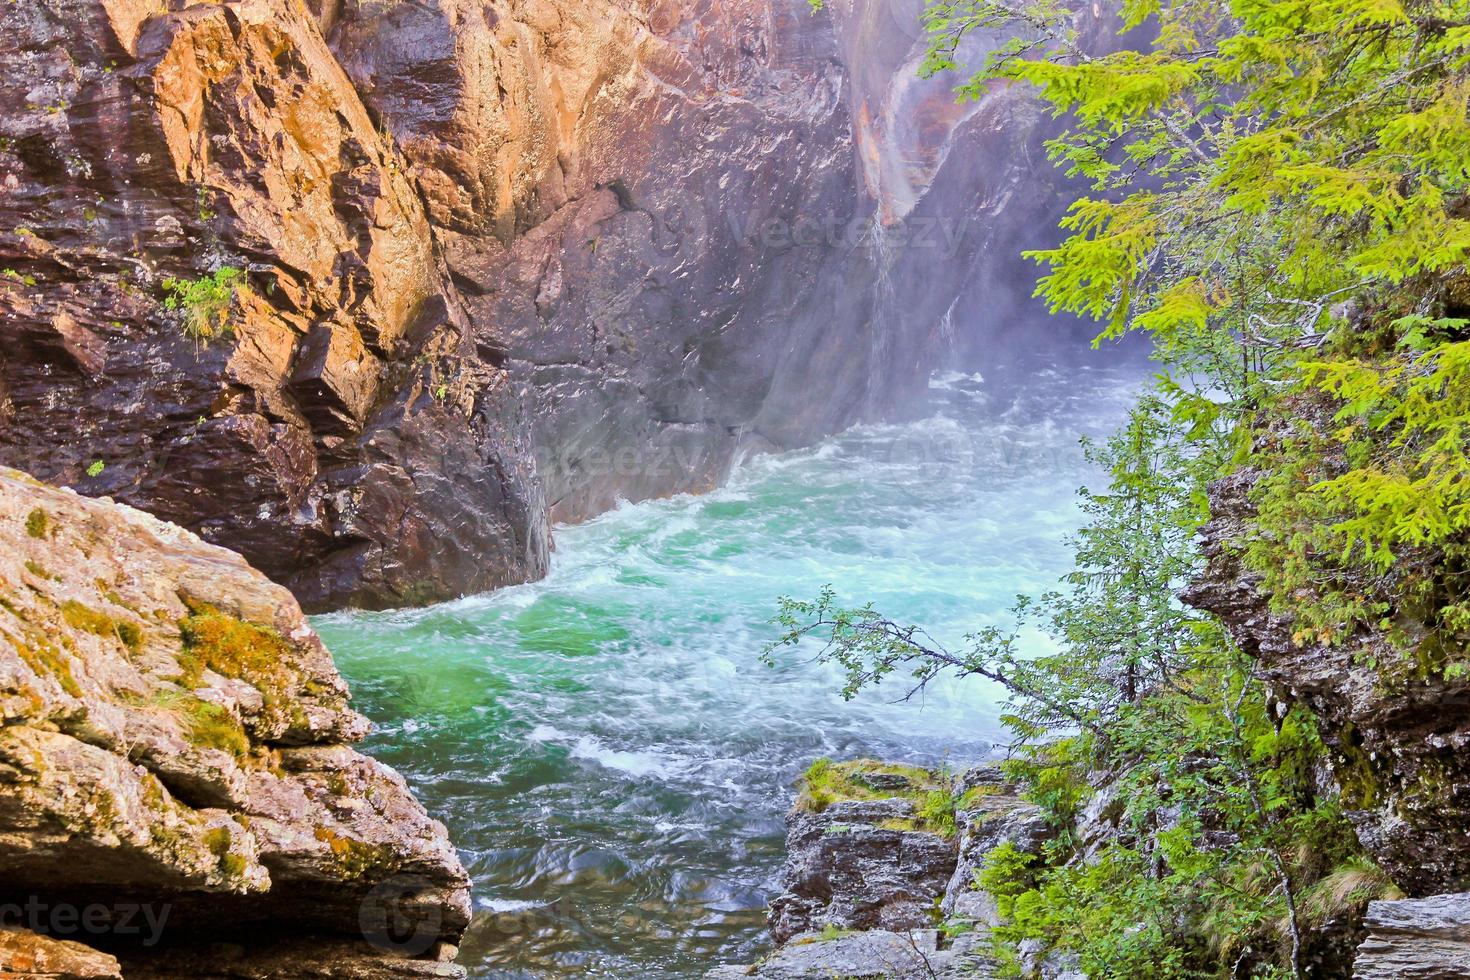 a mais bela cachoeira da europa. rjukandefossen hemsedal, buskerud, norway. foto